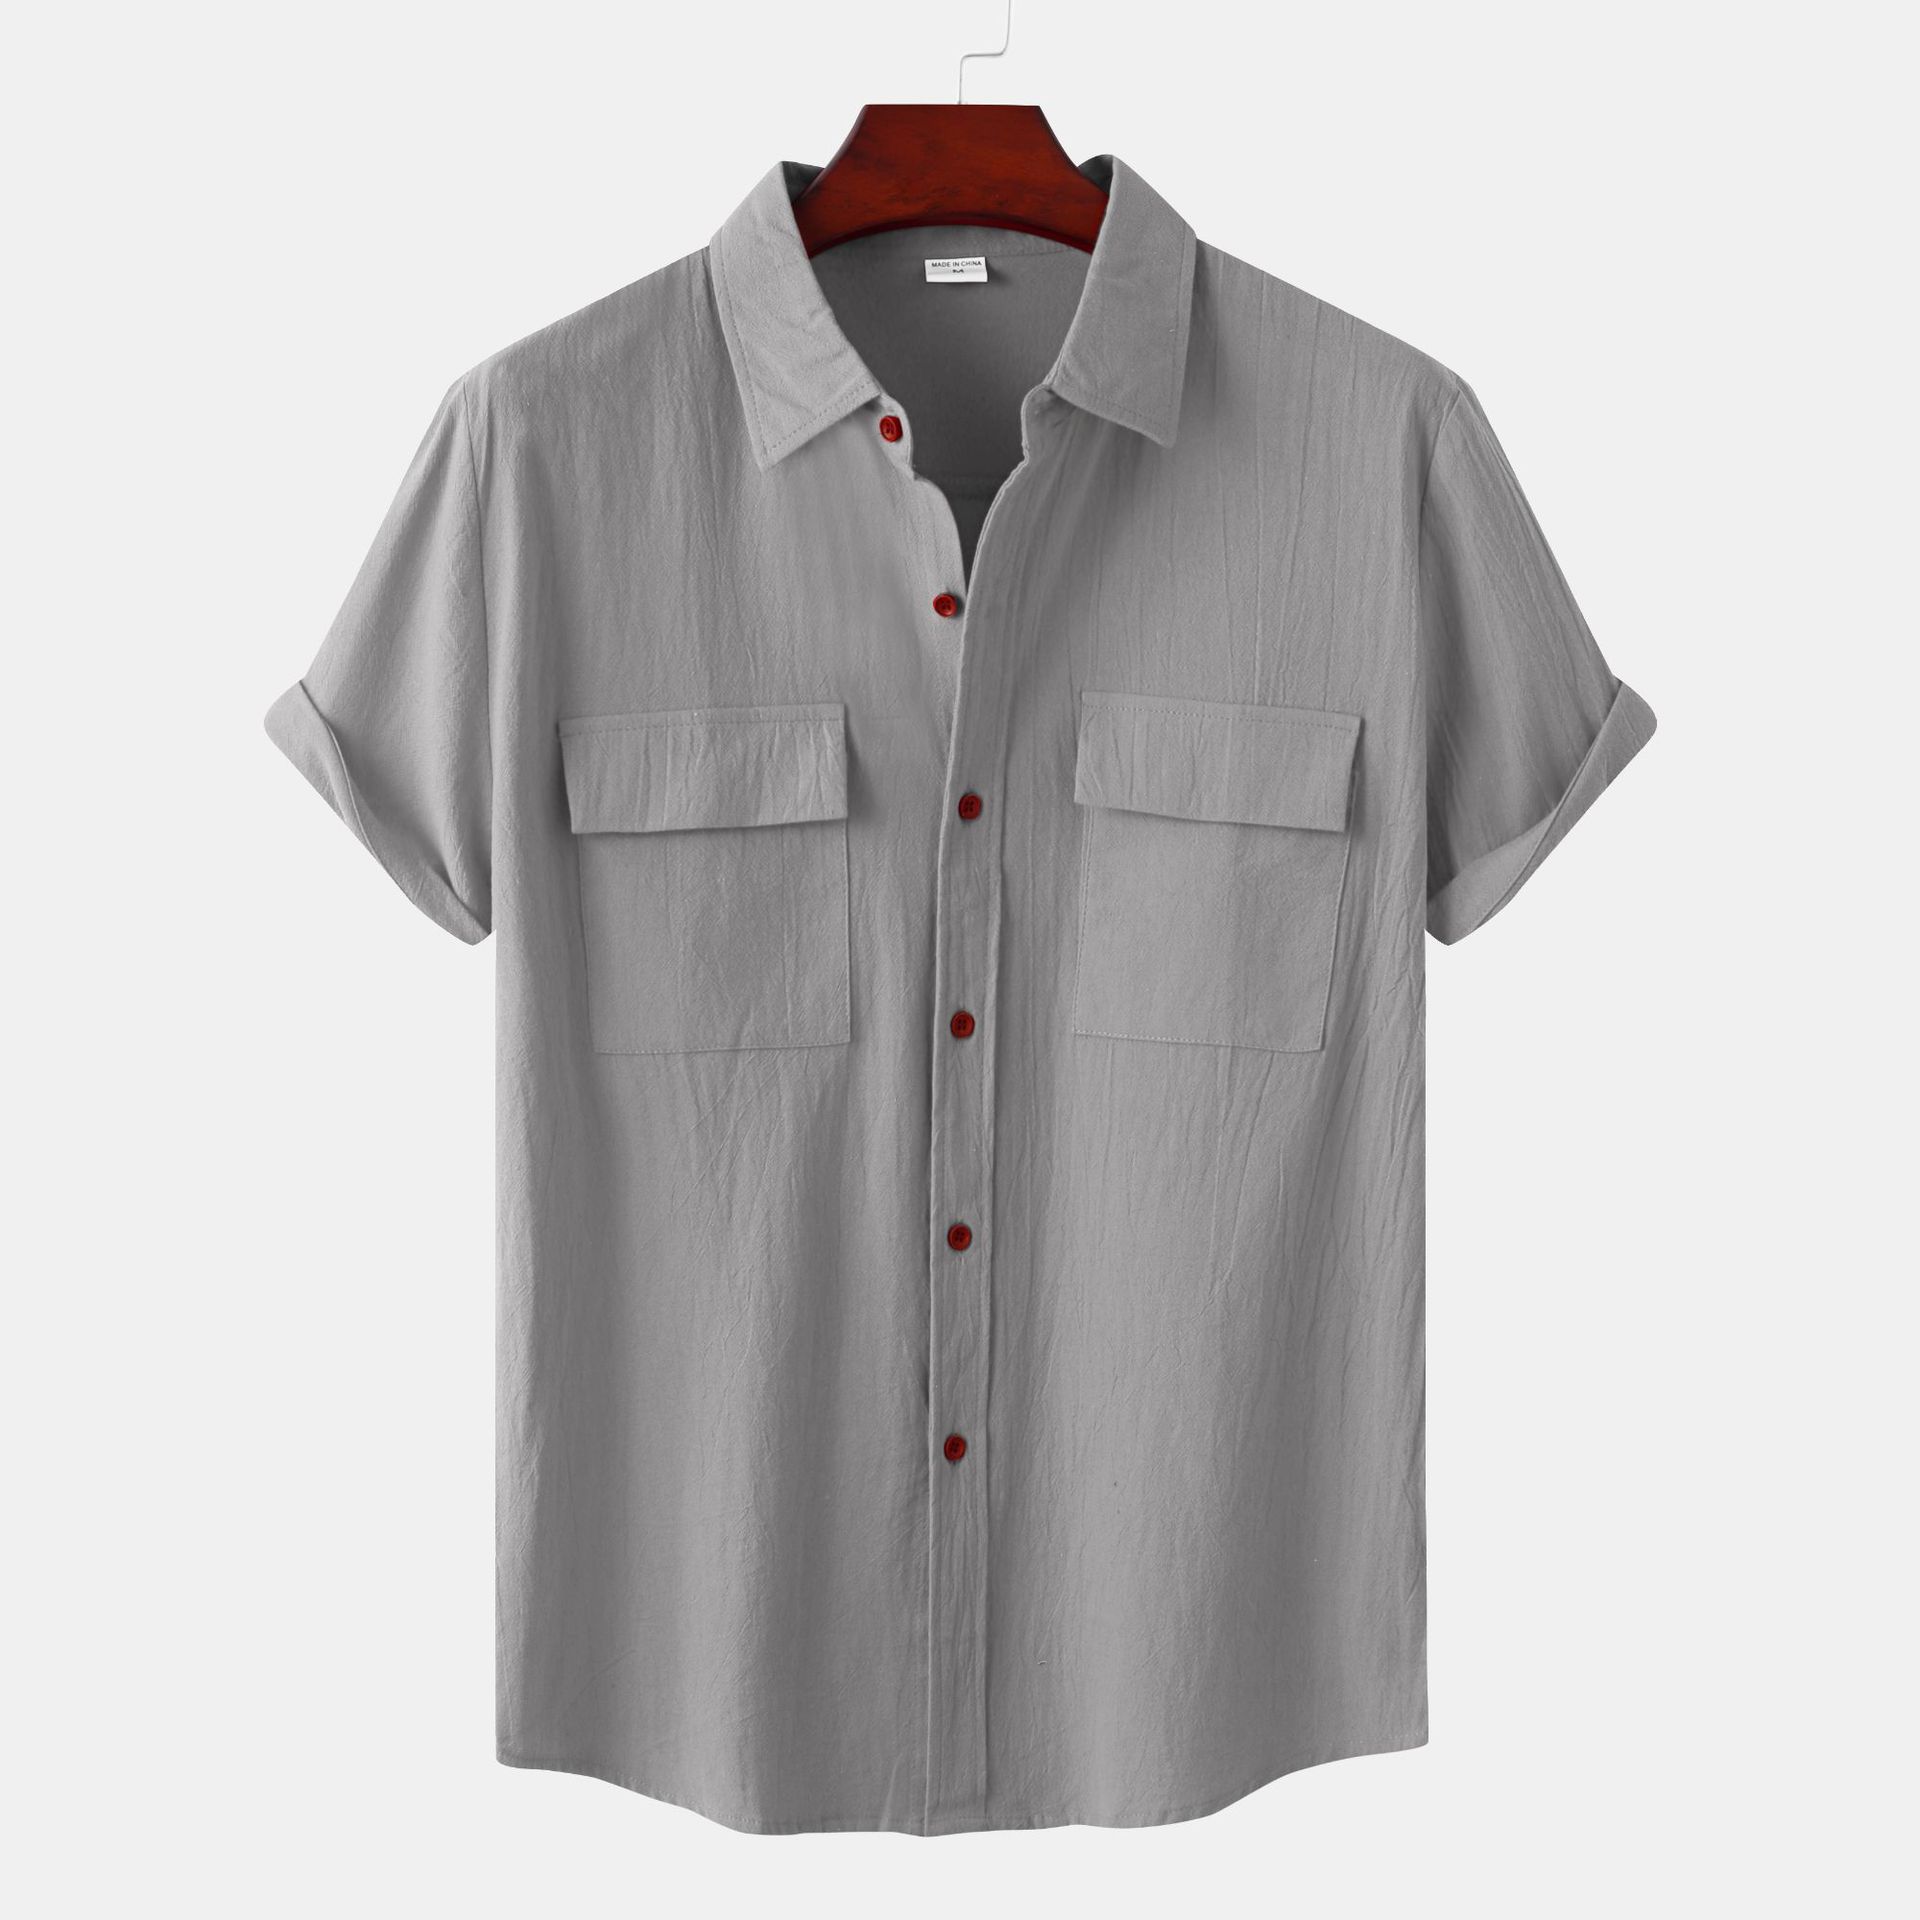 Men's Pocket Short Sleeve Chic Casual Shirt